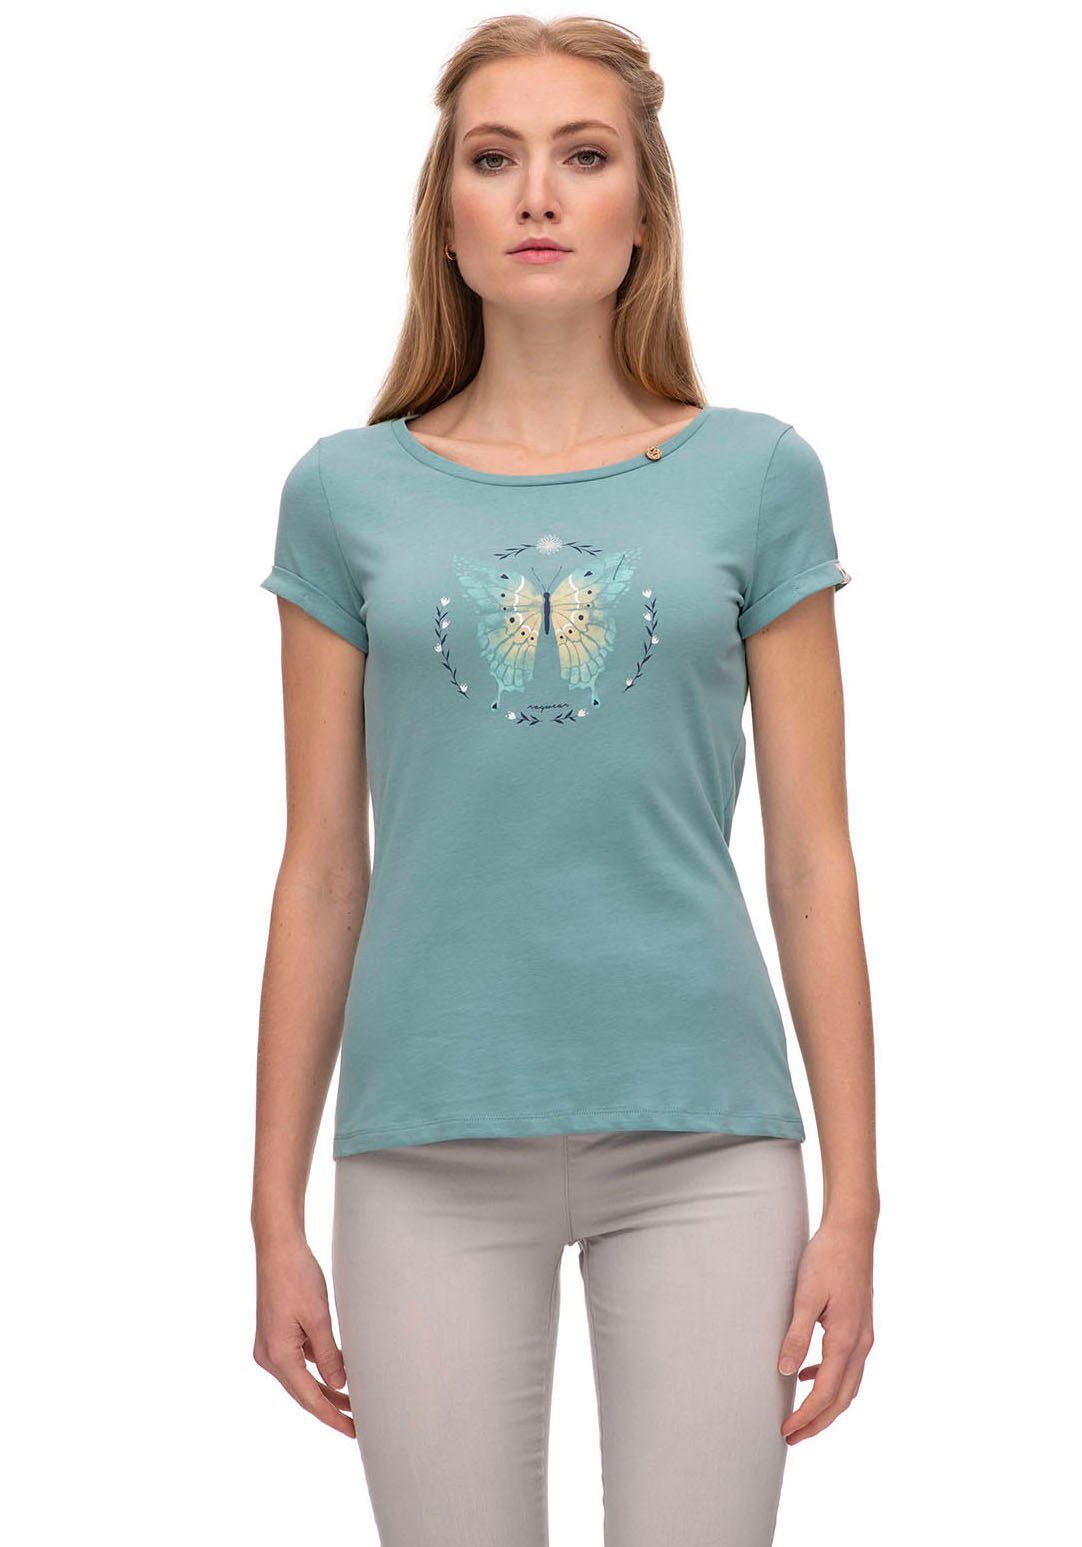 Ragwear Rundhalsshirt Shirt aqua T-Shirt BUTTERFLY Brust Schmetterlings-Print der FLORAH ORGAN auf mit